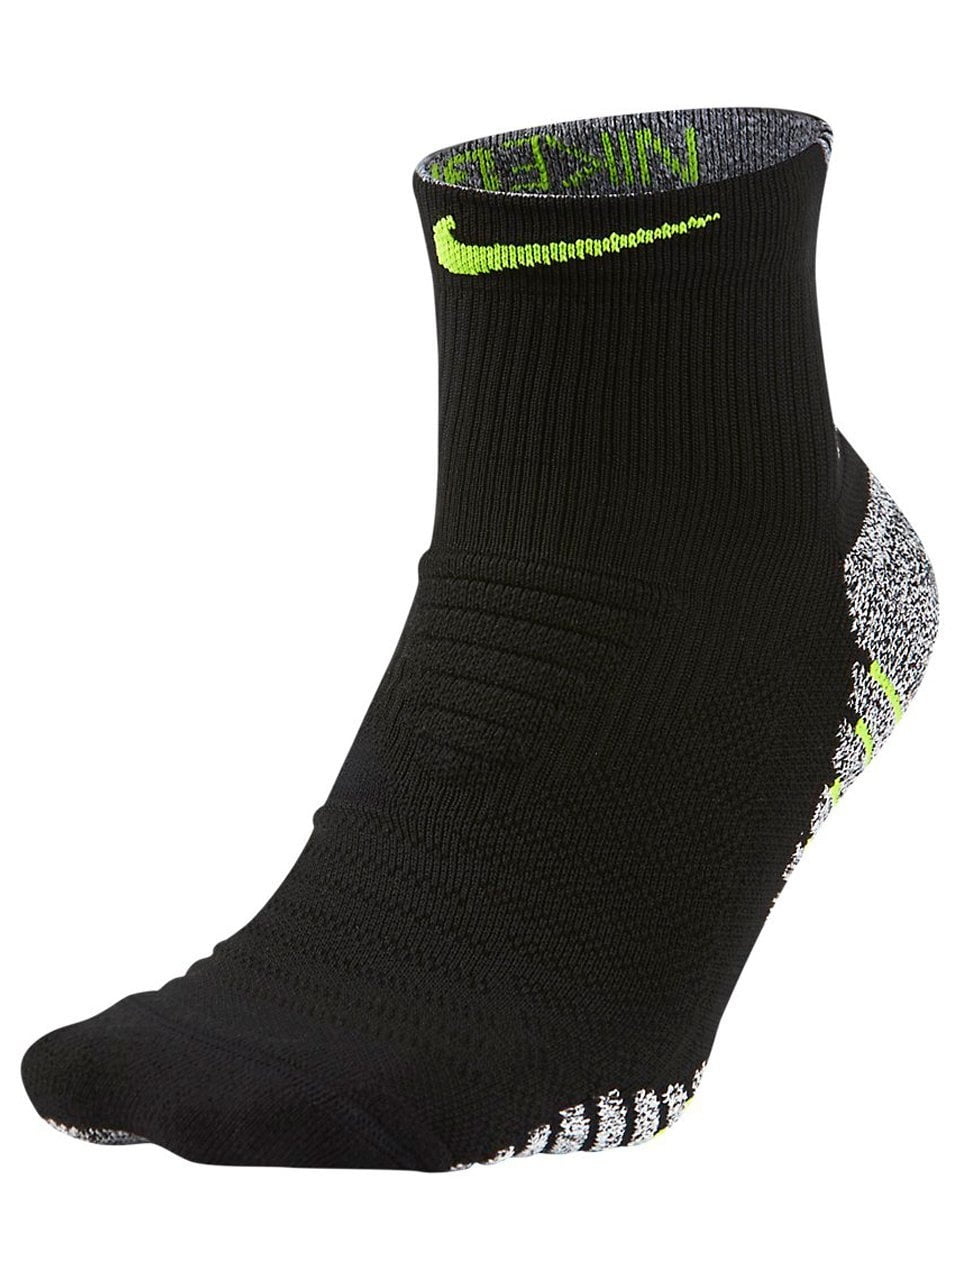 Nike Men's Lightweight NikeGrip Quarter/Mid Socks, Black/Volt, XL - Walmart.com